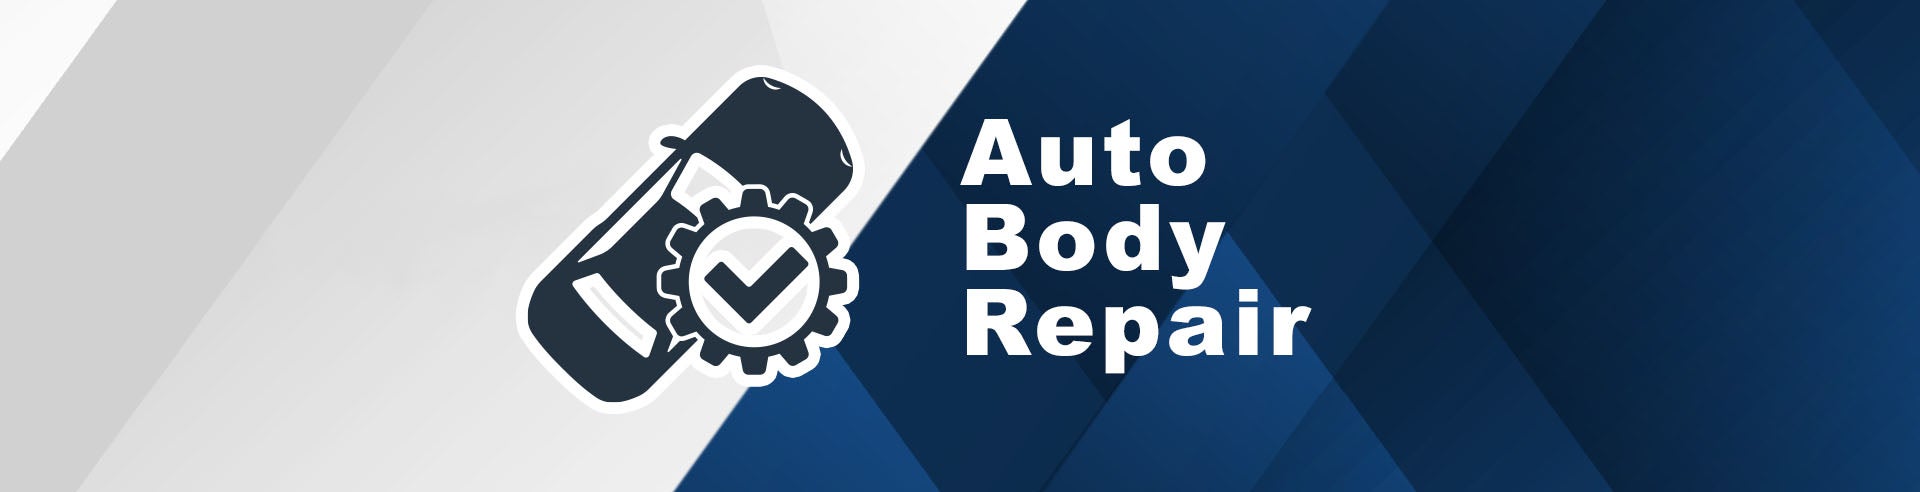 Collision Auto Body Repair